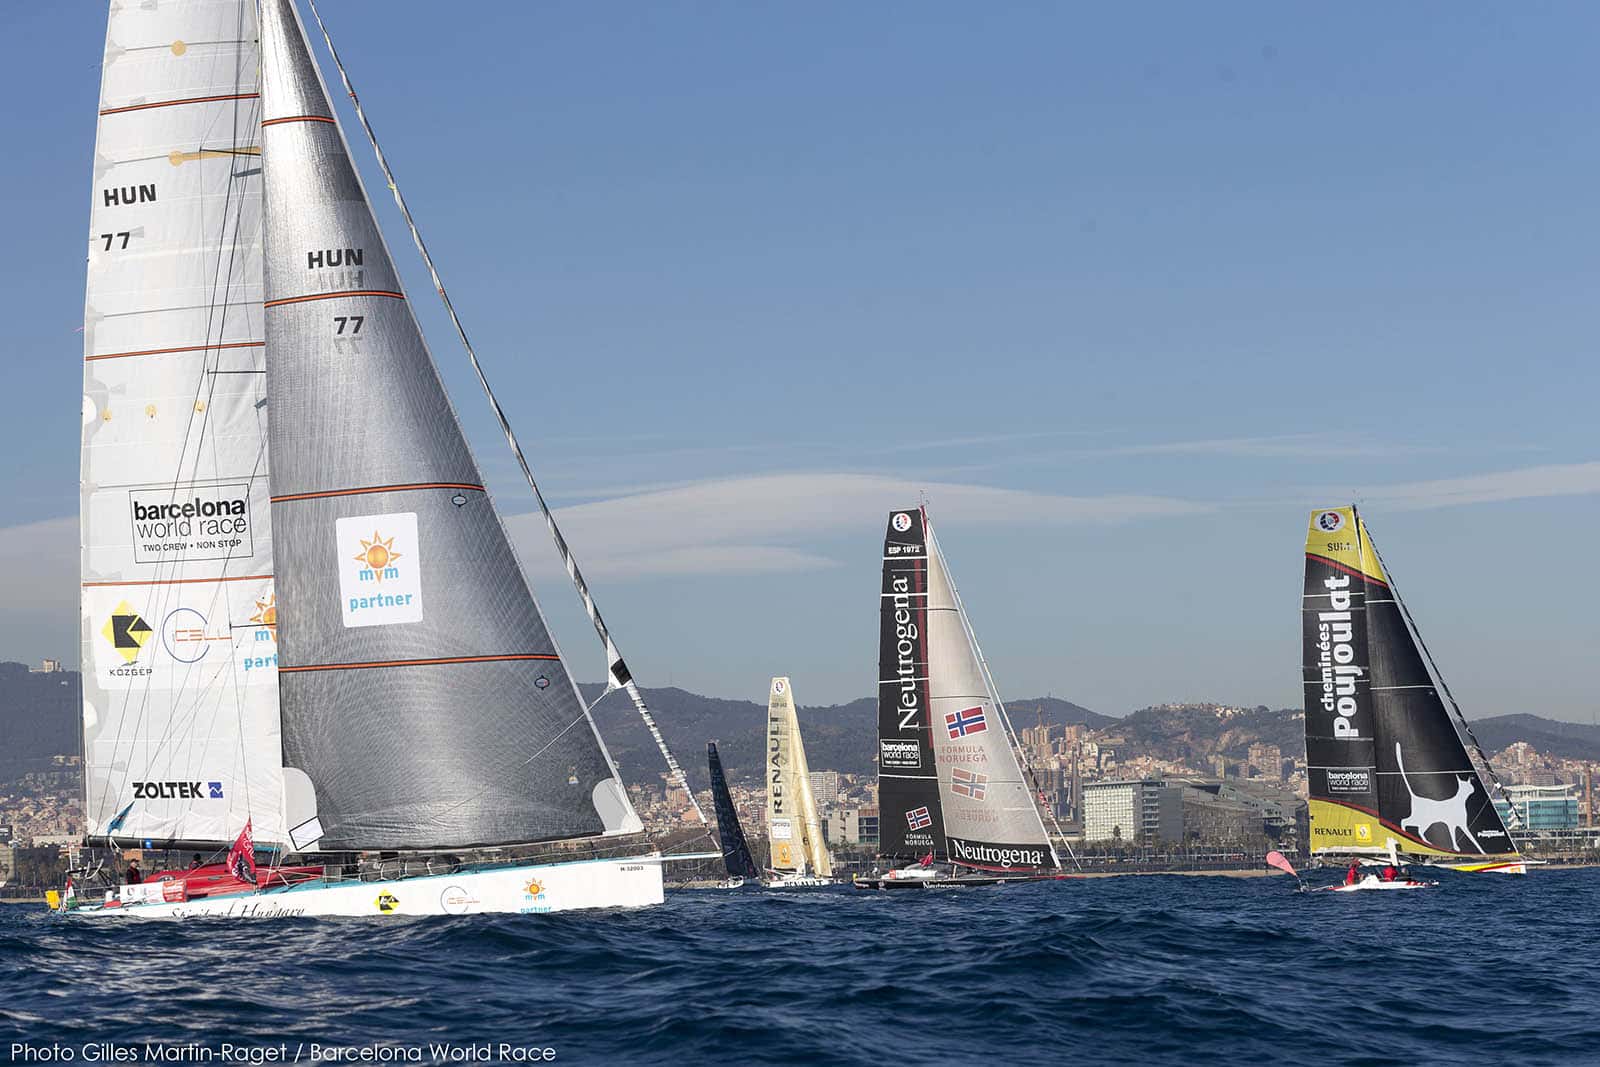 31/12/2014, Barcelona (ESP), Barcelona World Race 2014-15, Start